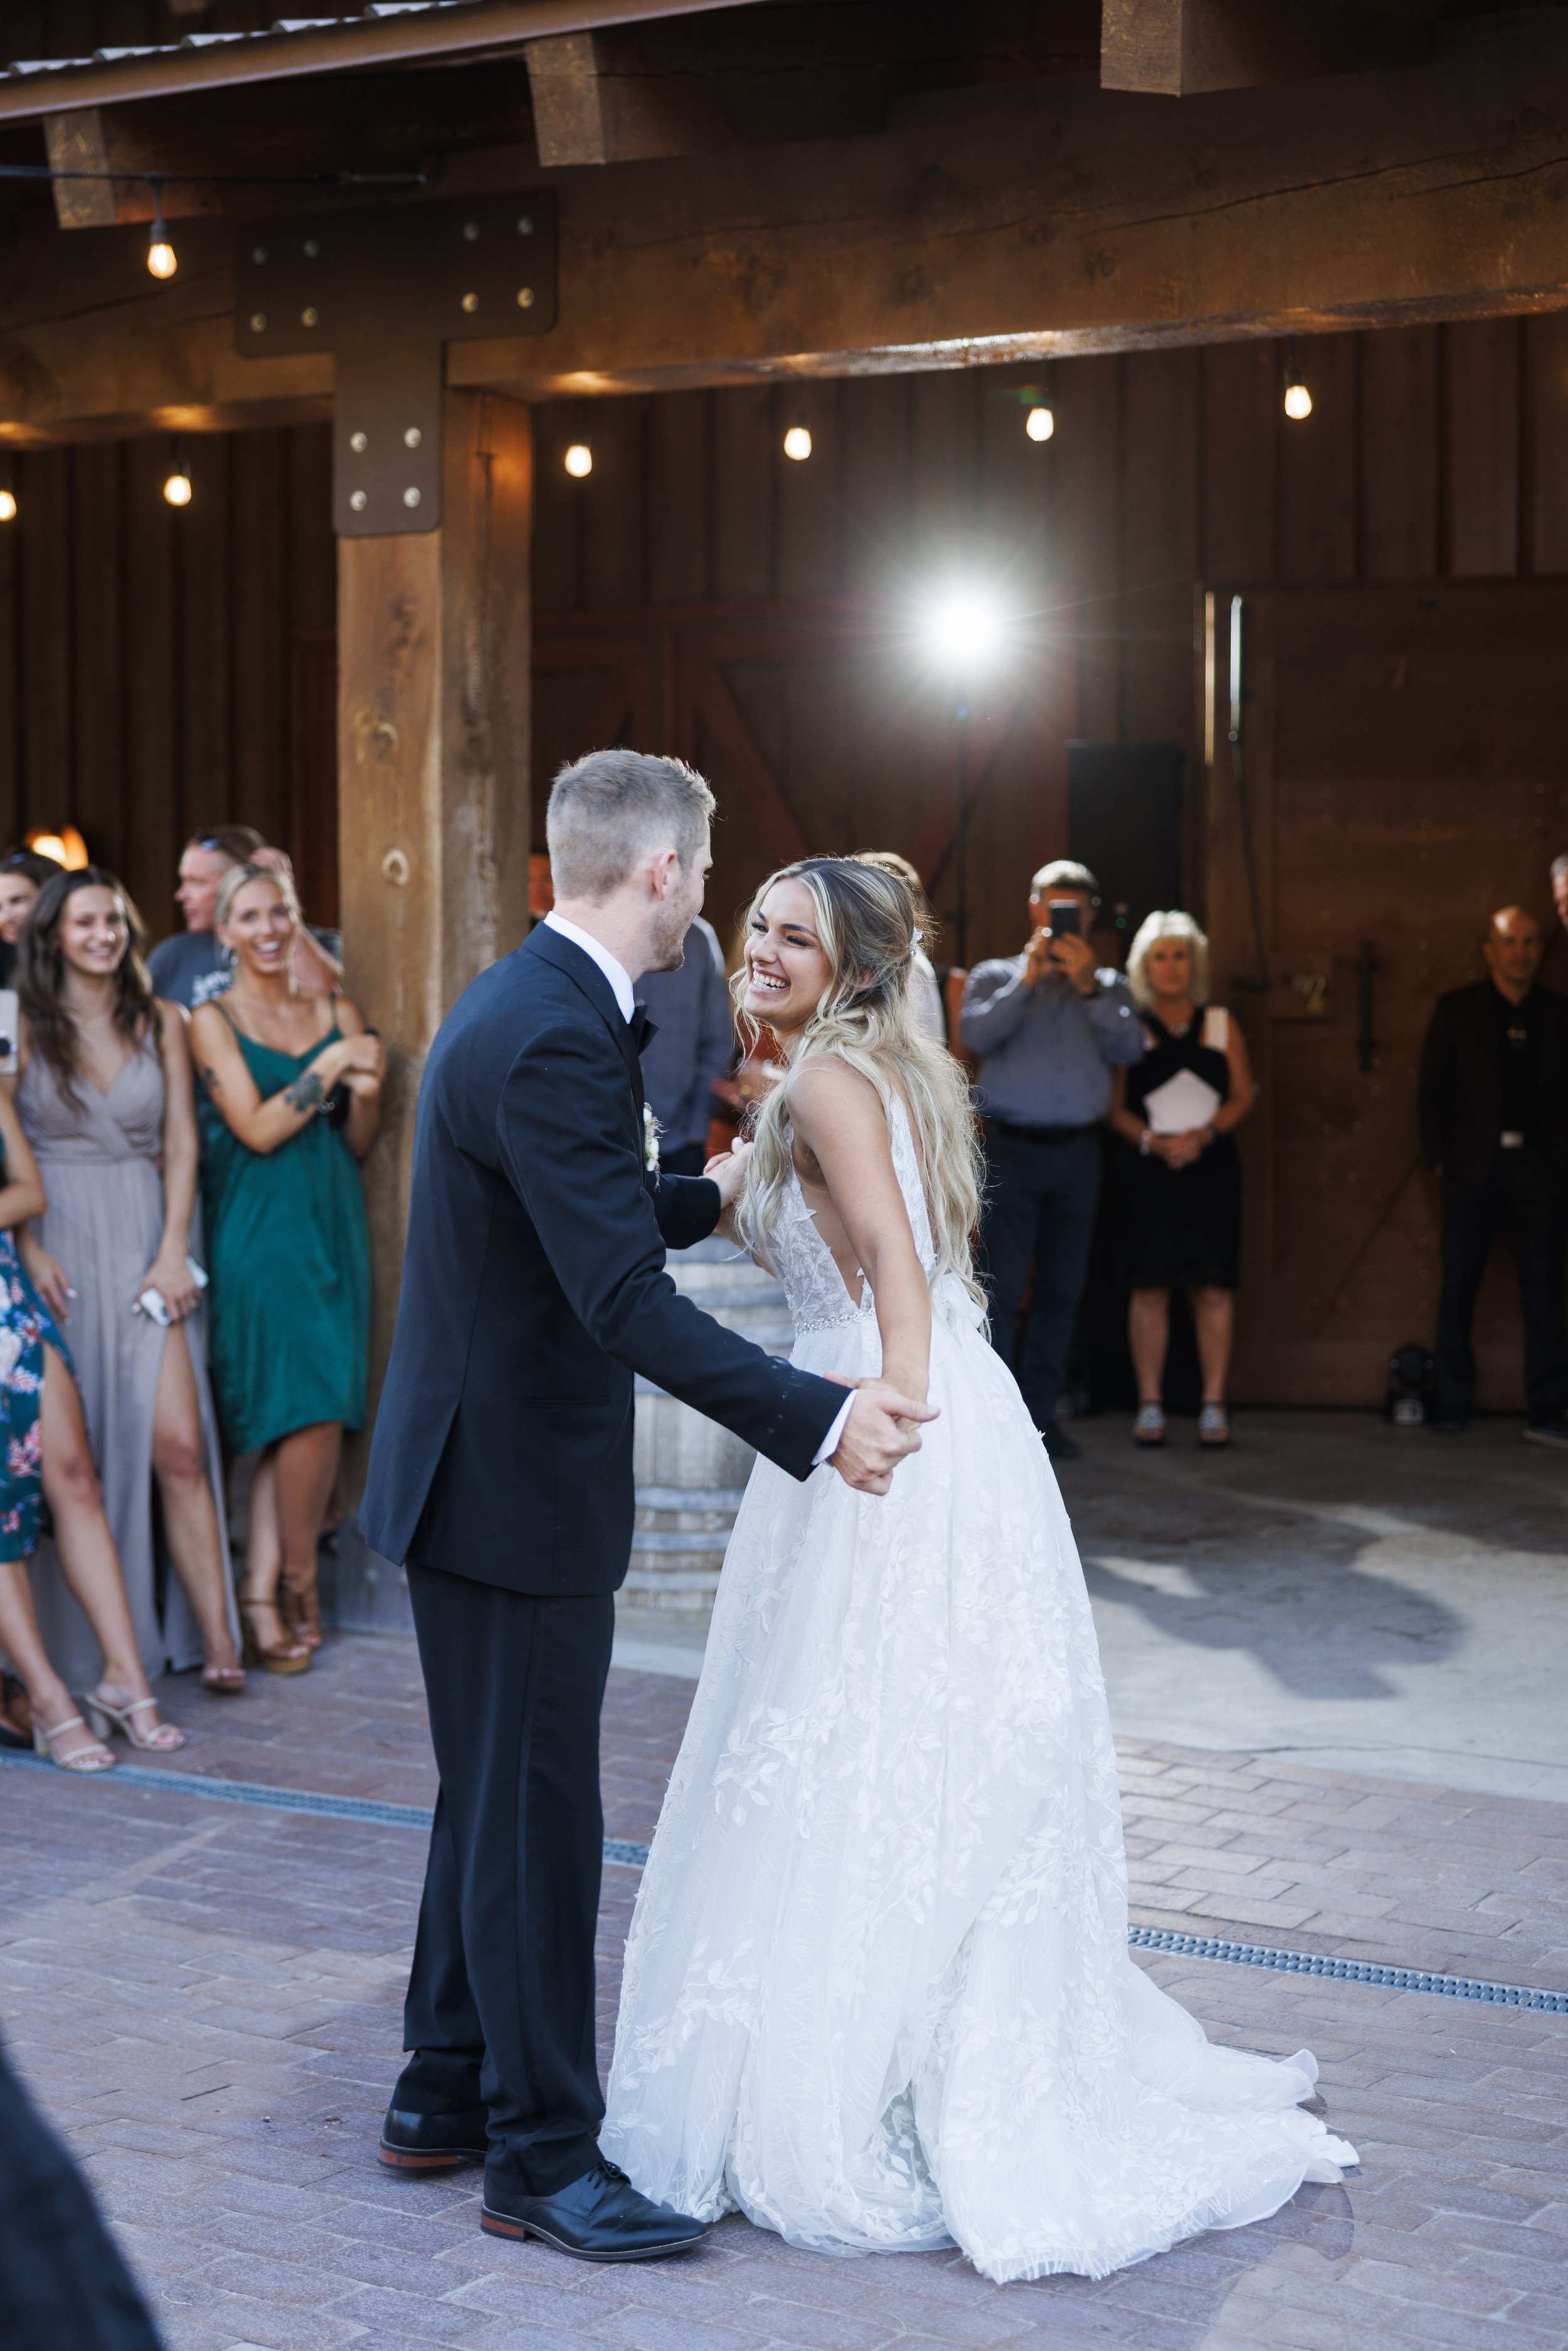  During a small-town wedding in Utah, Savanna Richardson Photography captures the newlyweds dancing in a barn. barn wedding venues Utah #SavannaRichardsonPhotography #SavannaRichardsonWeddings #QuietMeadowFarms #MapletonUTweddingphotographers 